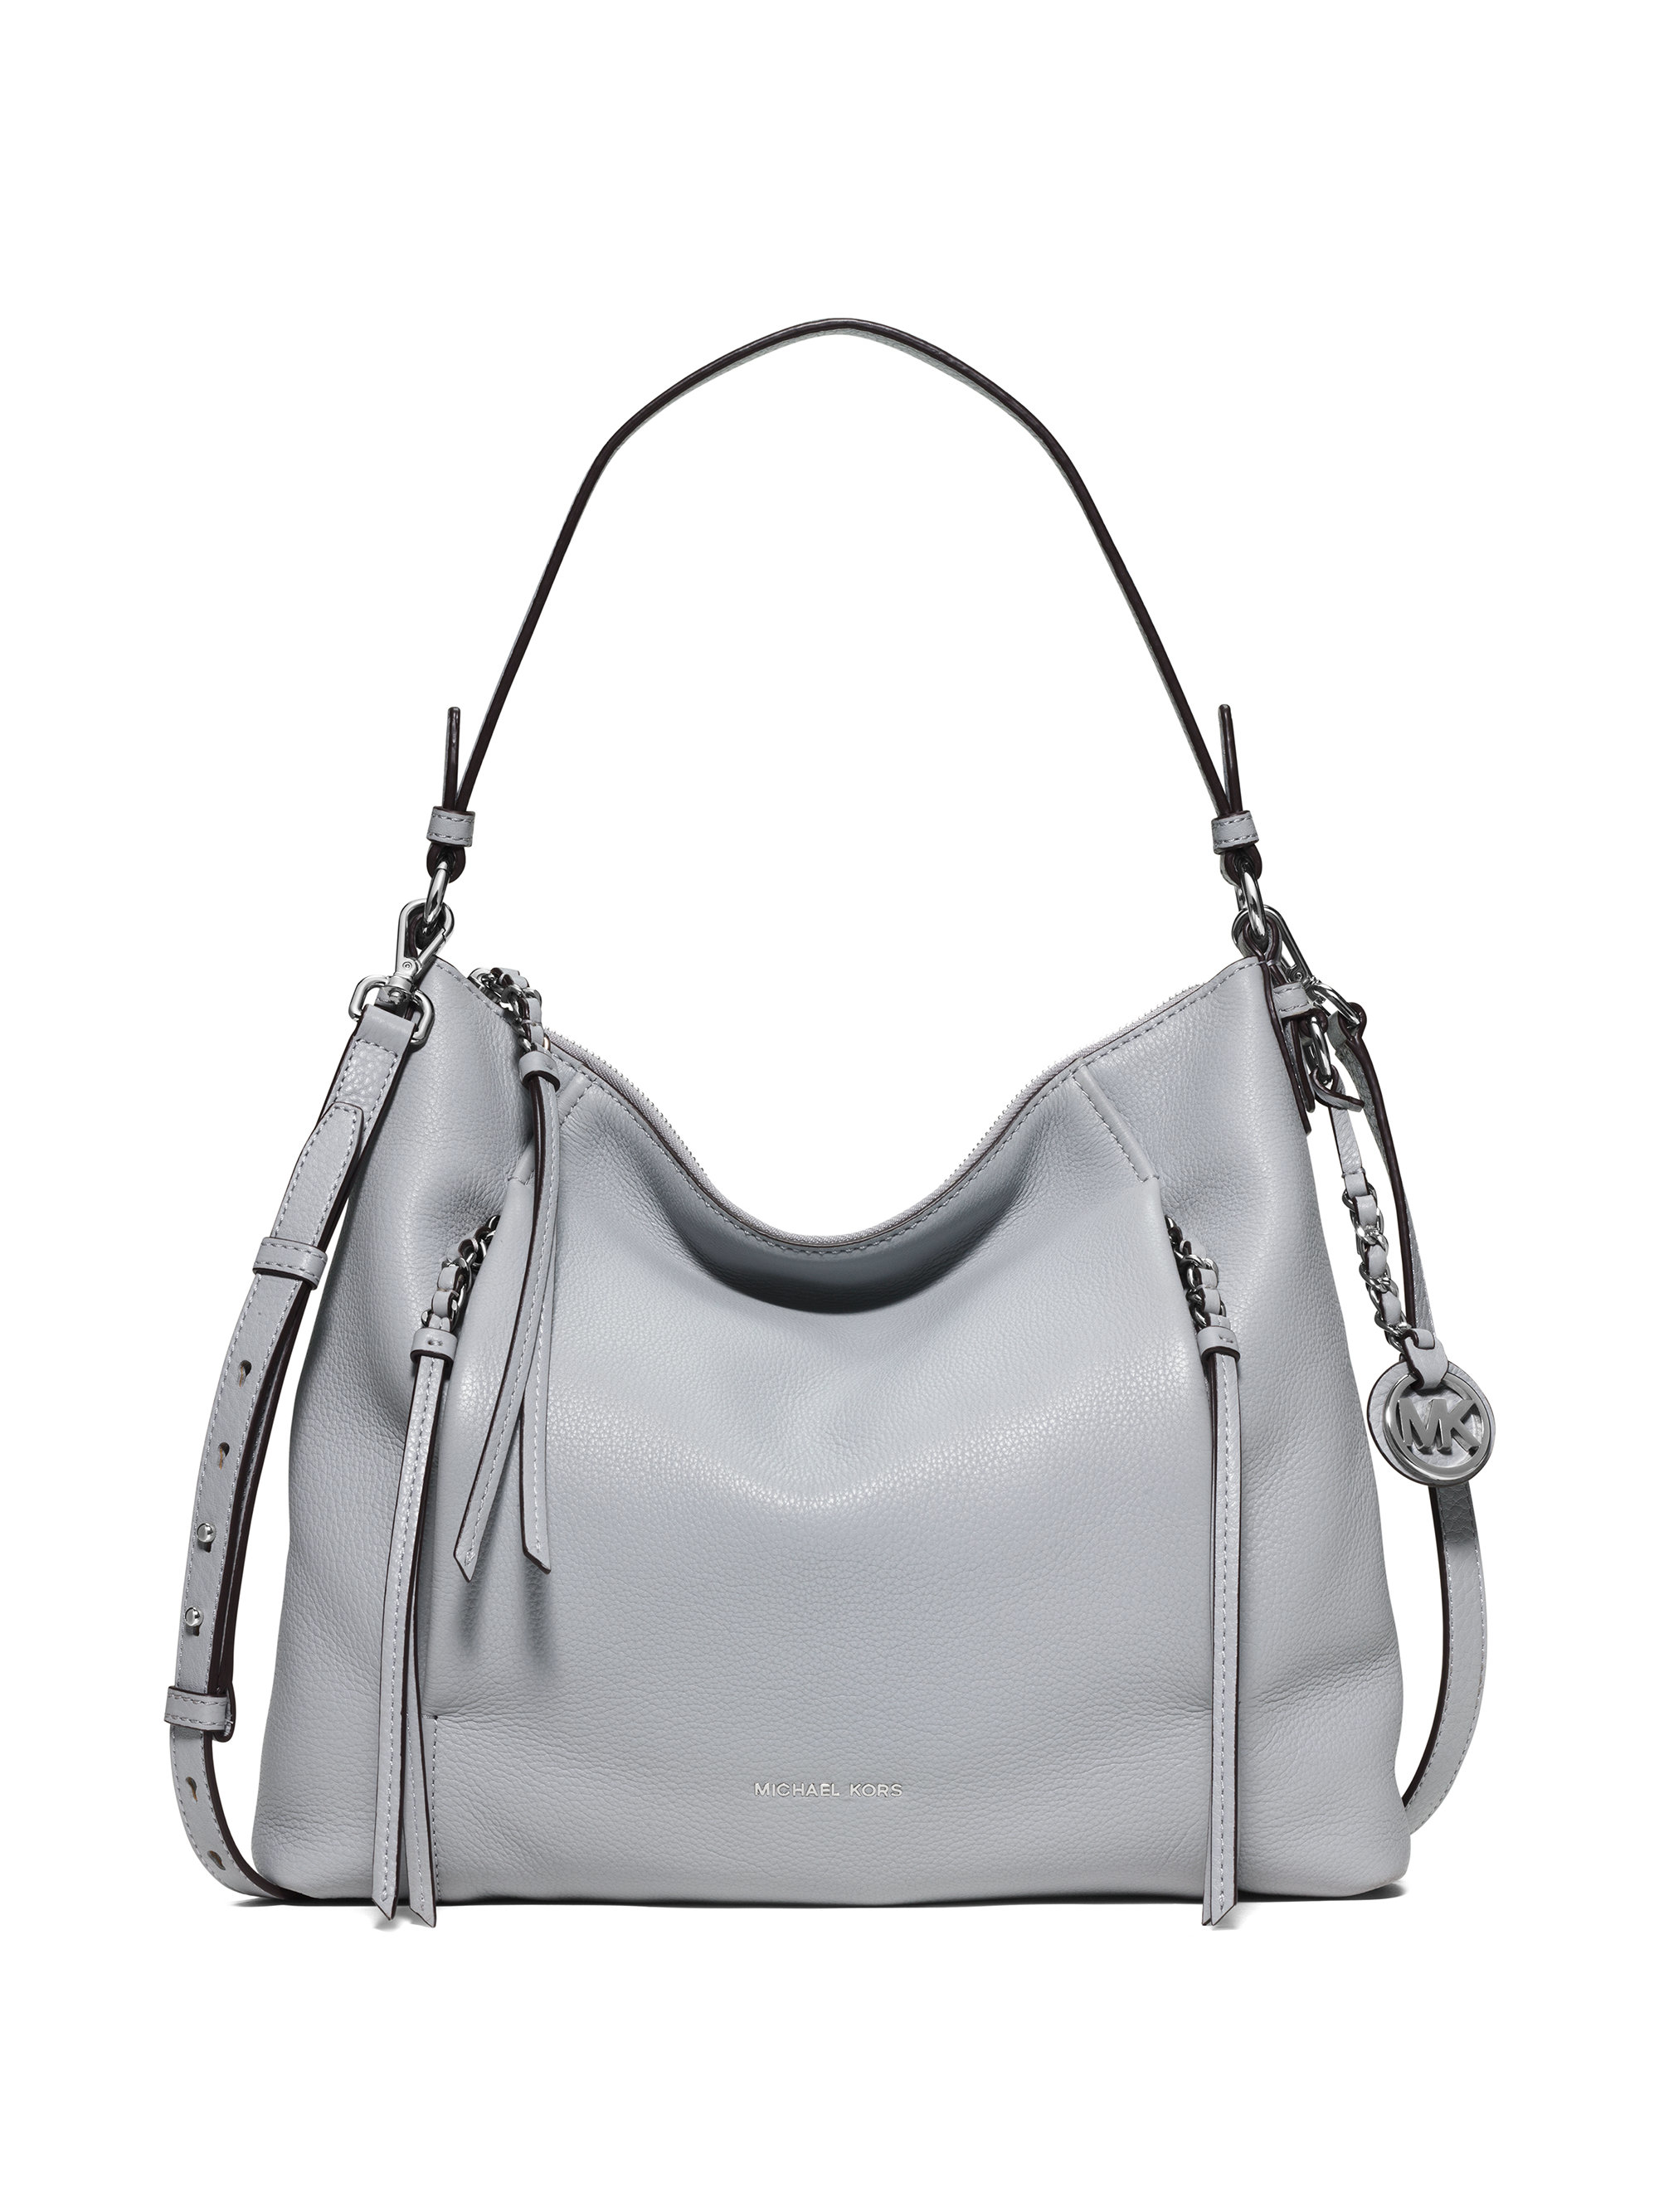 MICHAEL Michael Kors Corinne Large Leather Shoulder Bag in Gray -